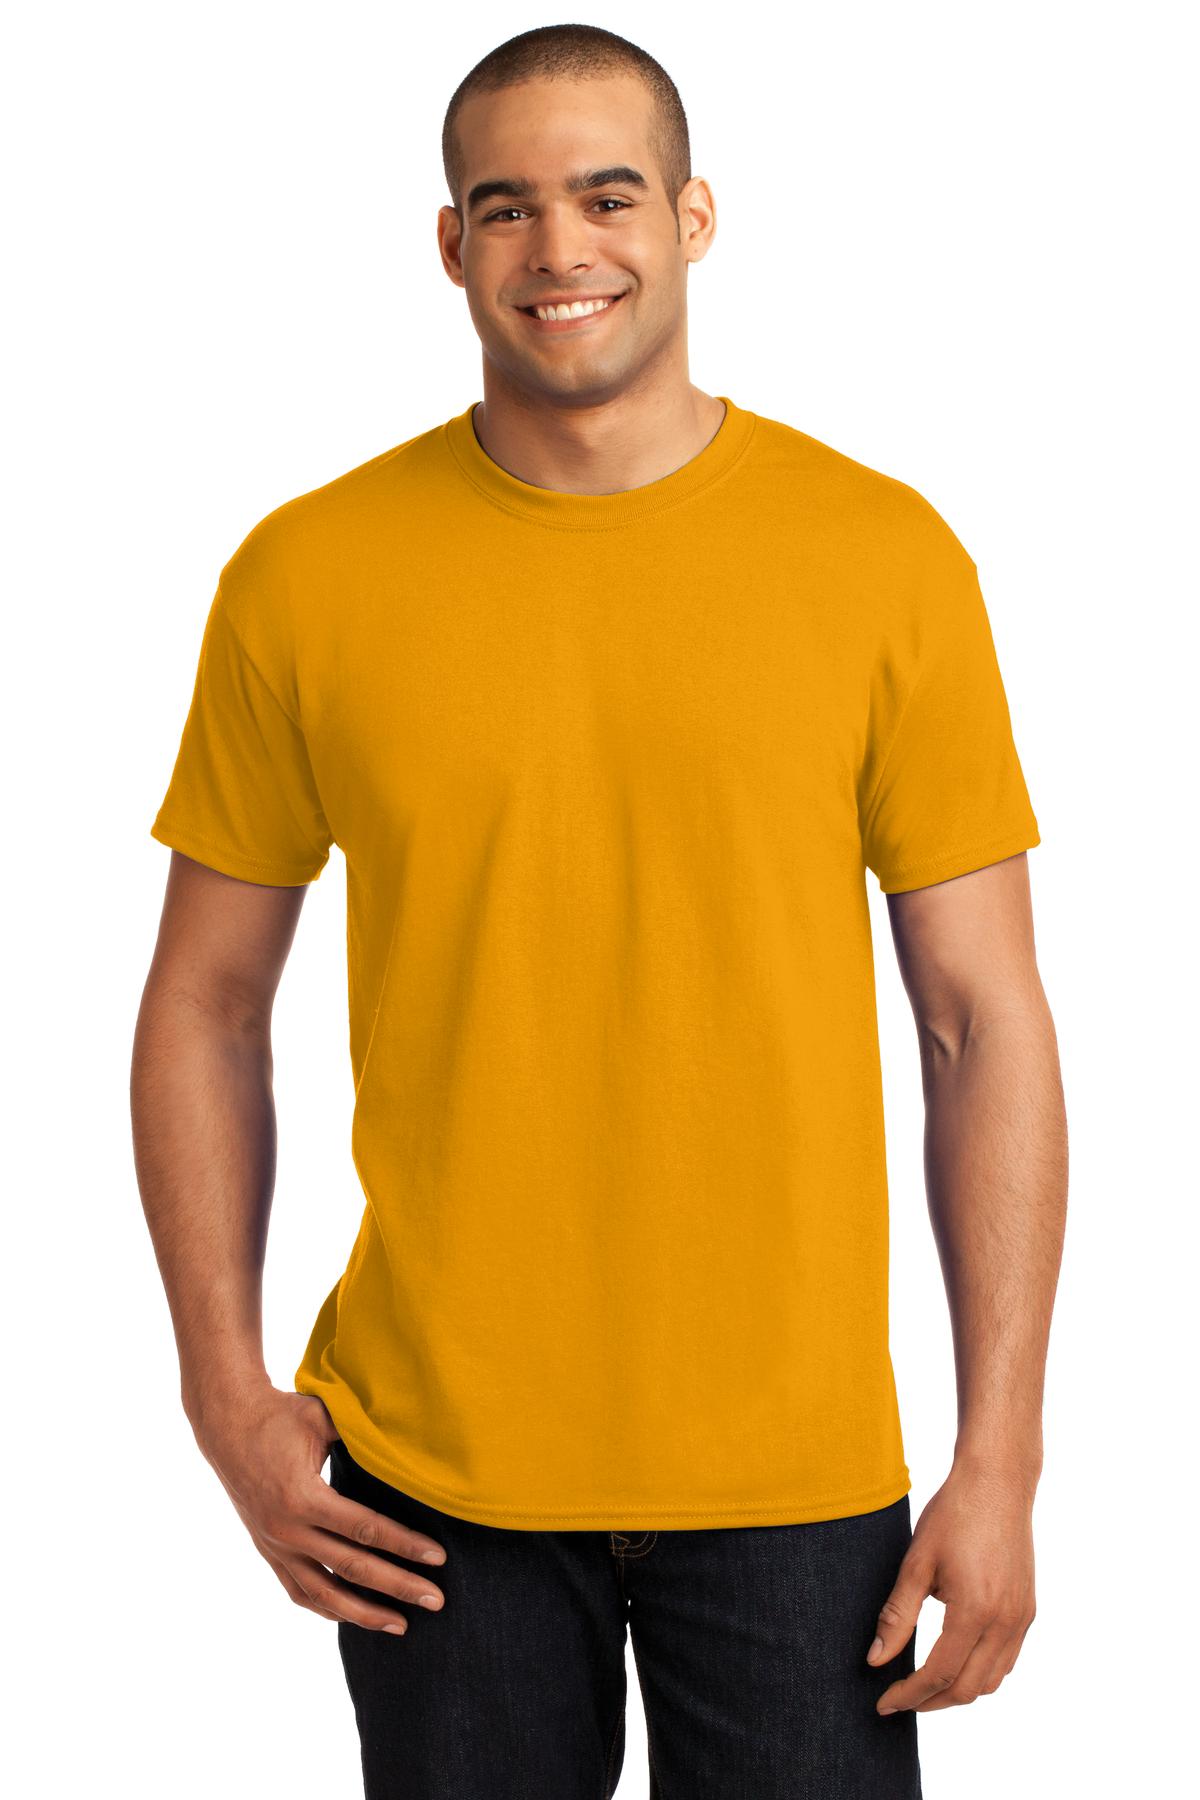 Hanes® - EcoSmart® 50/50 Cotton/Poly T-Shirt. 5170 [Gold] - DFW Impression